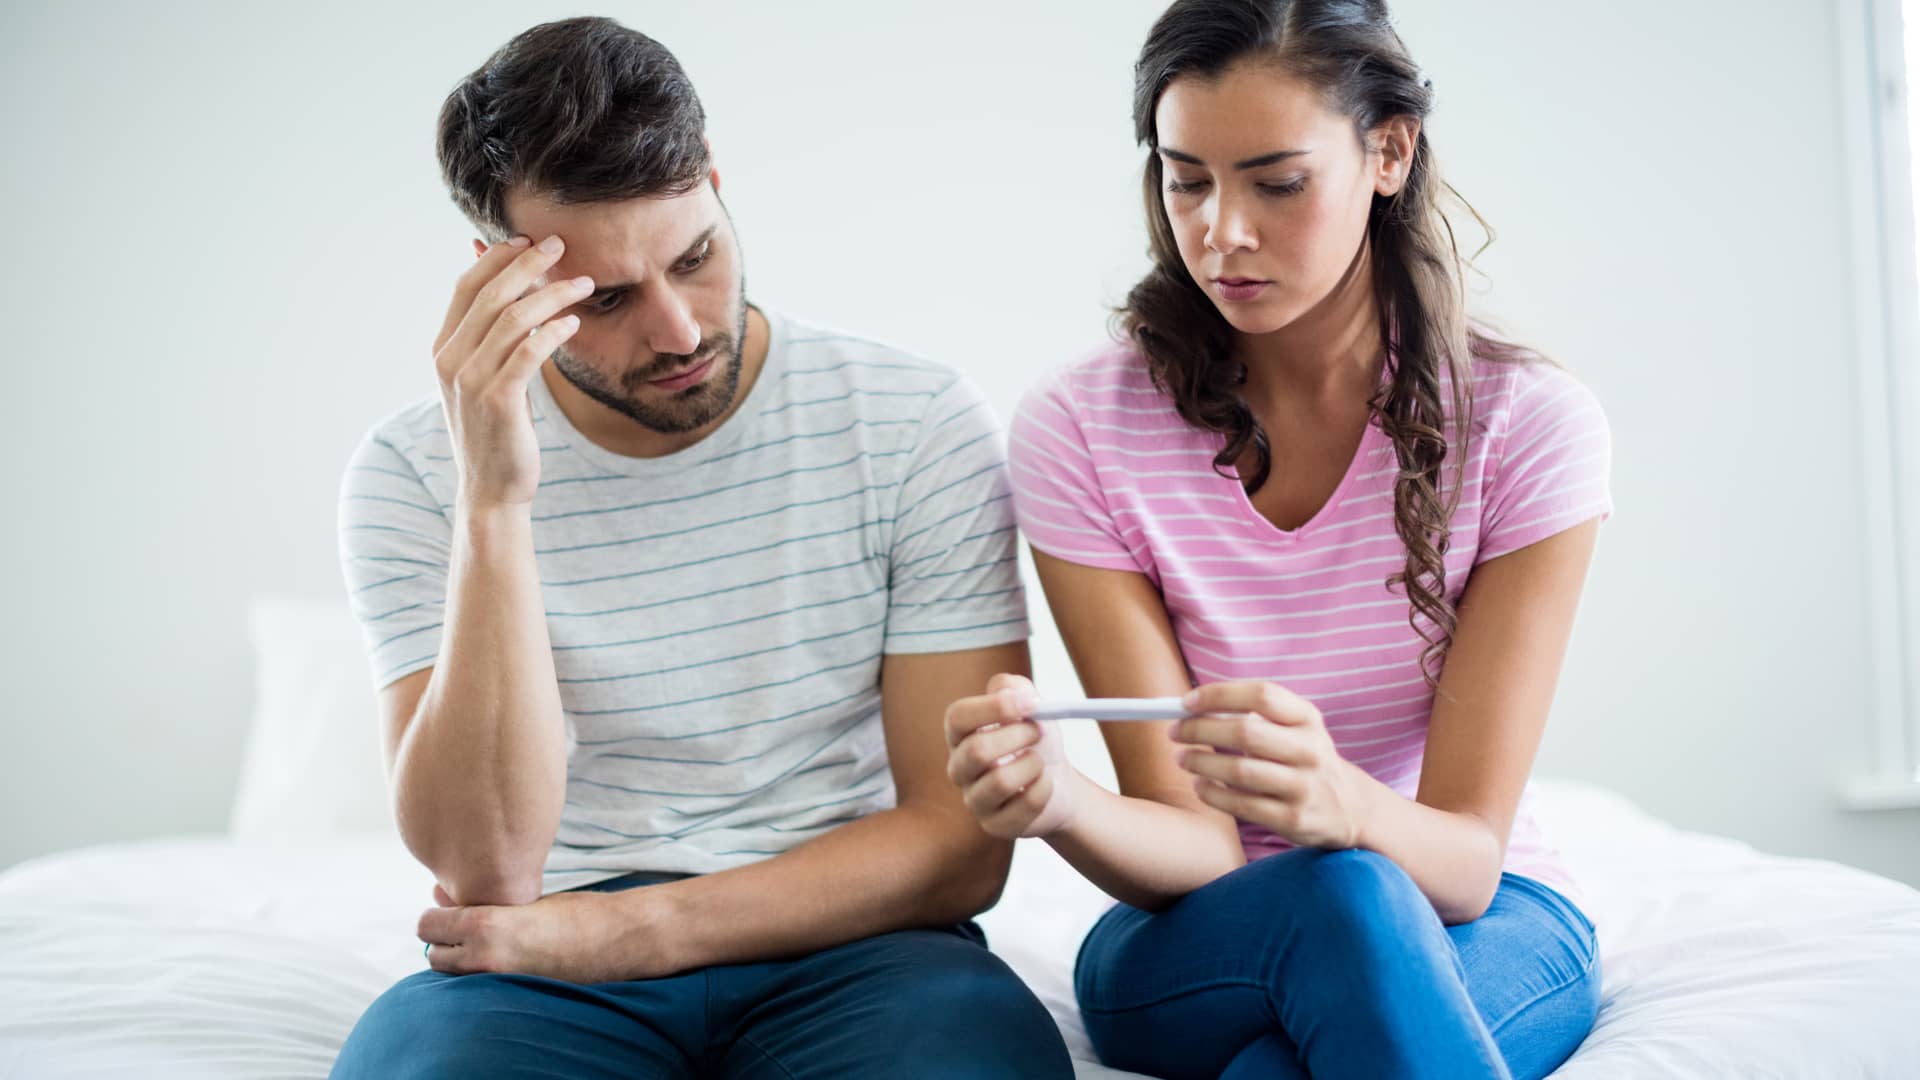 Test de embarazo negativo: espera a 5 días de retraso para fiarte